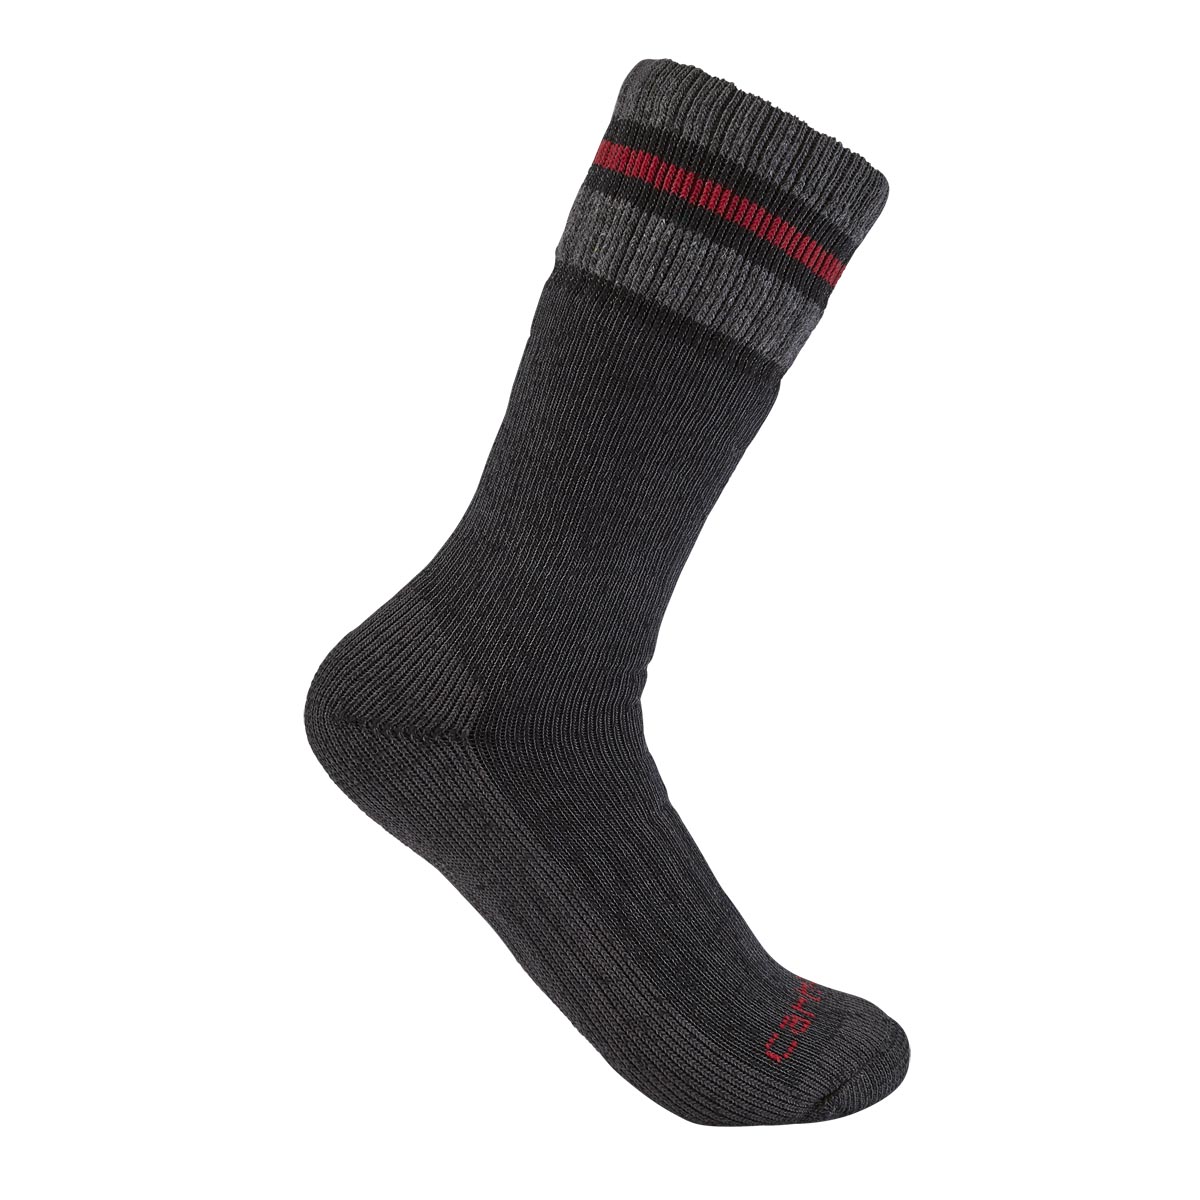 Carhartt Men's Heavyweight Synthetic Wool Blend Boot Sock 2 Pack